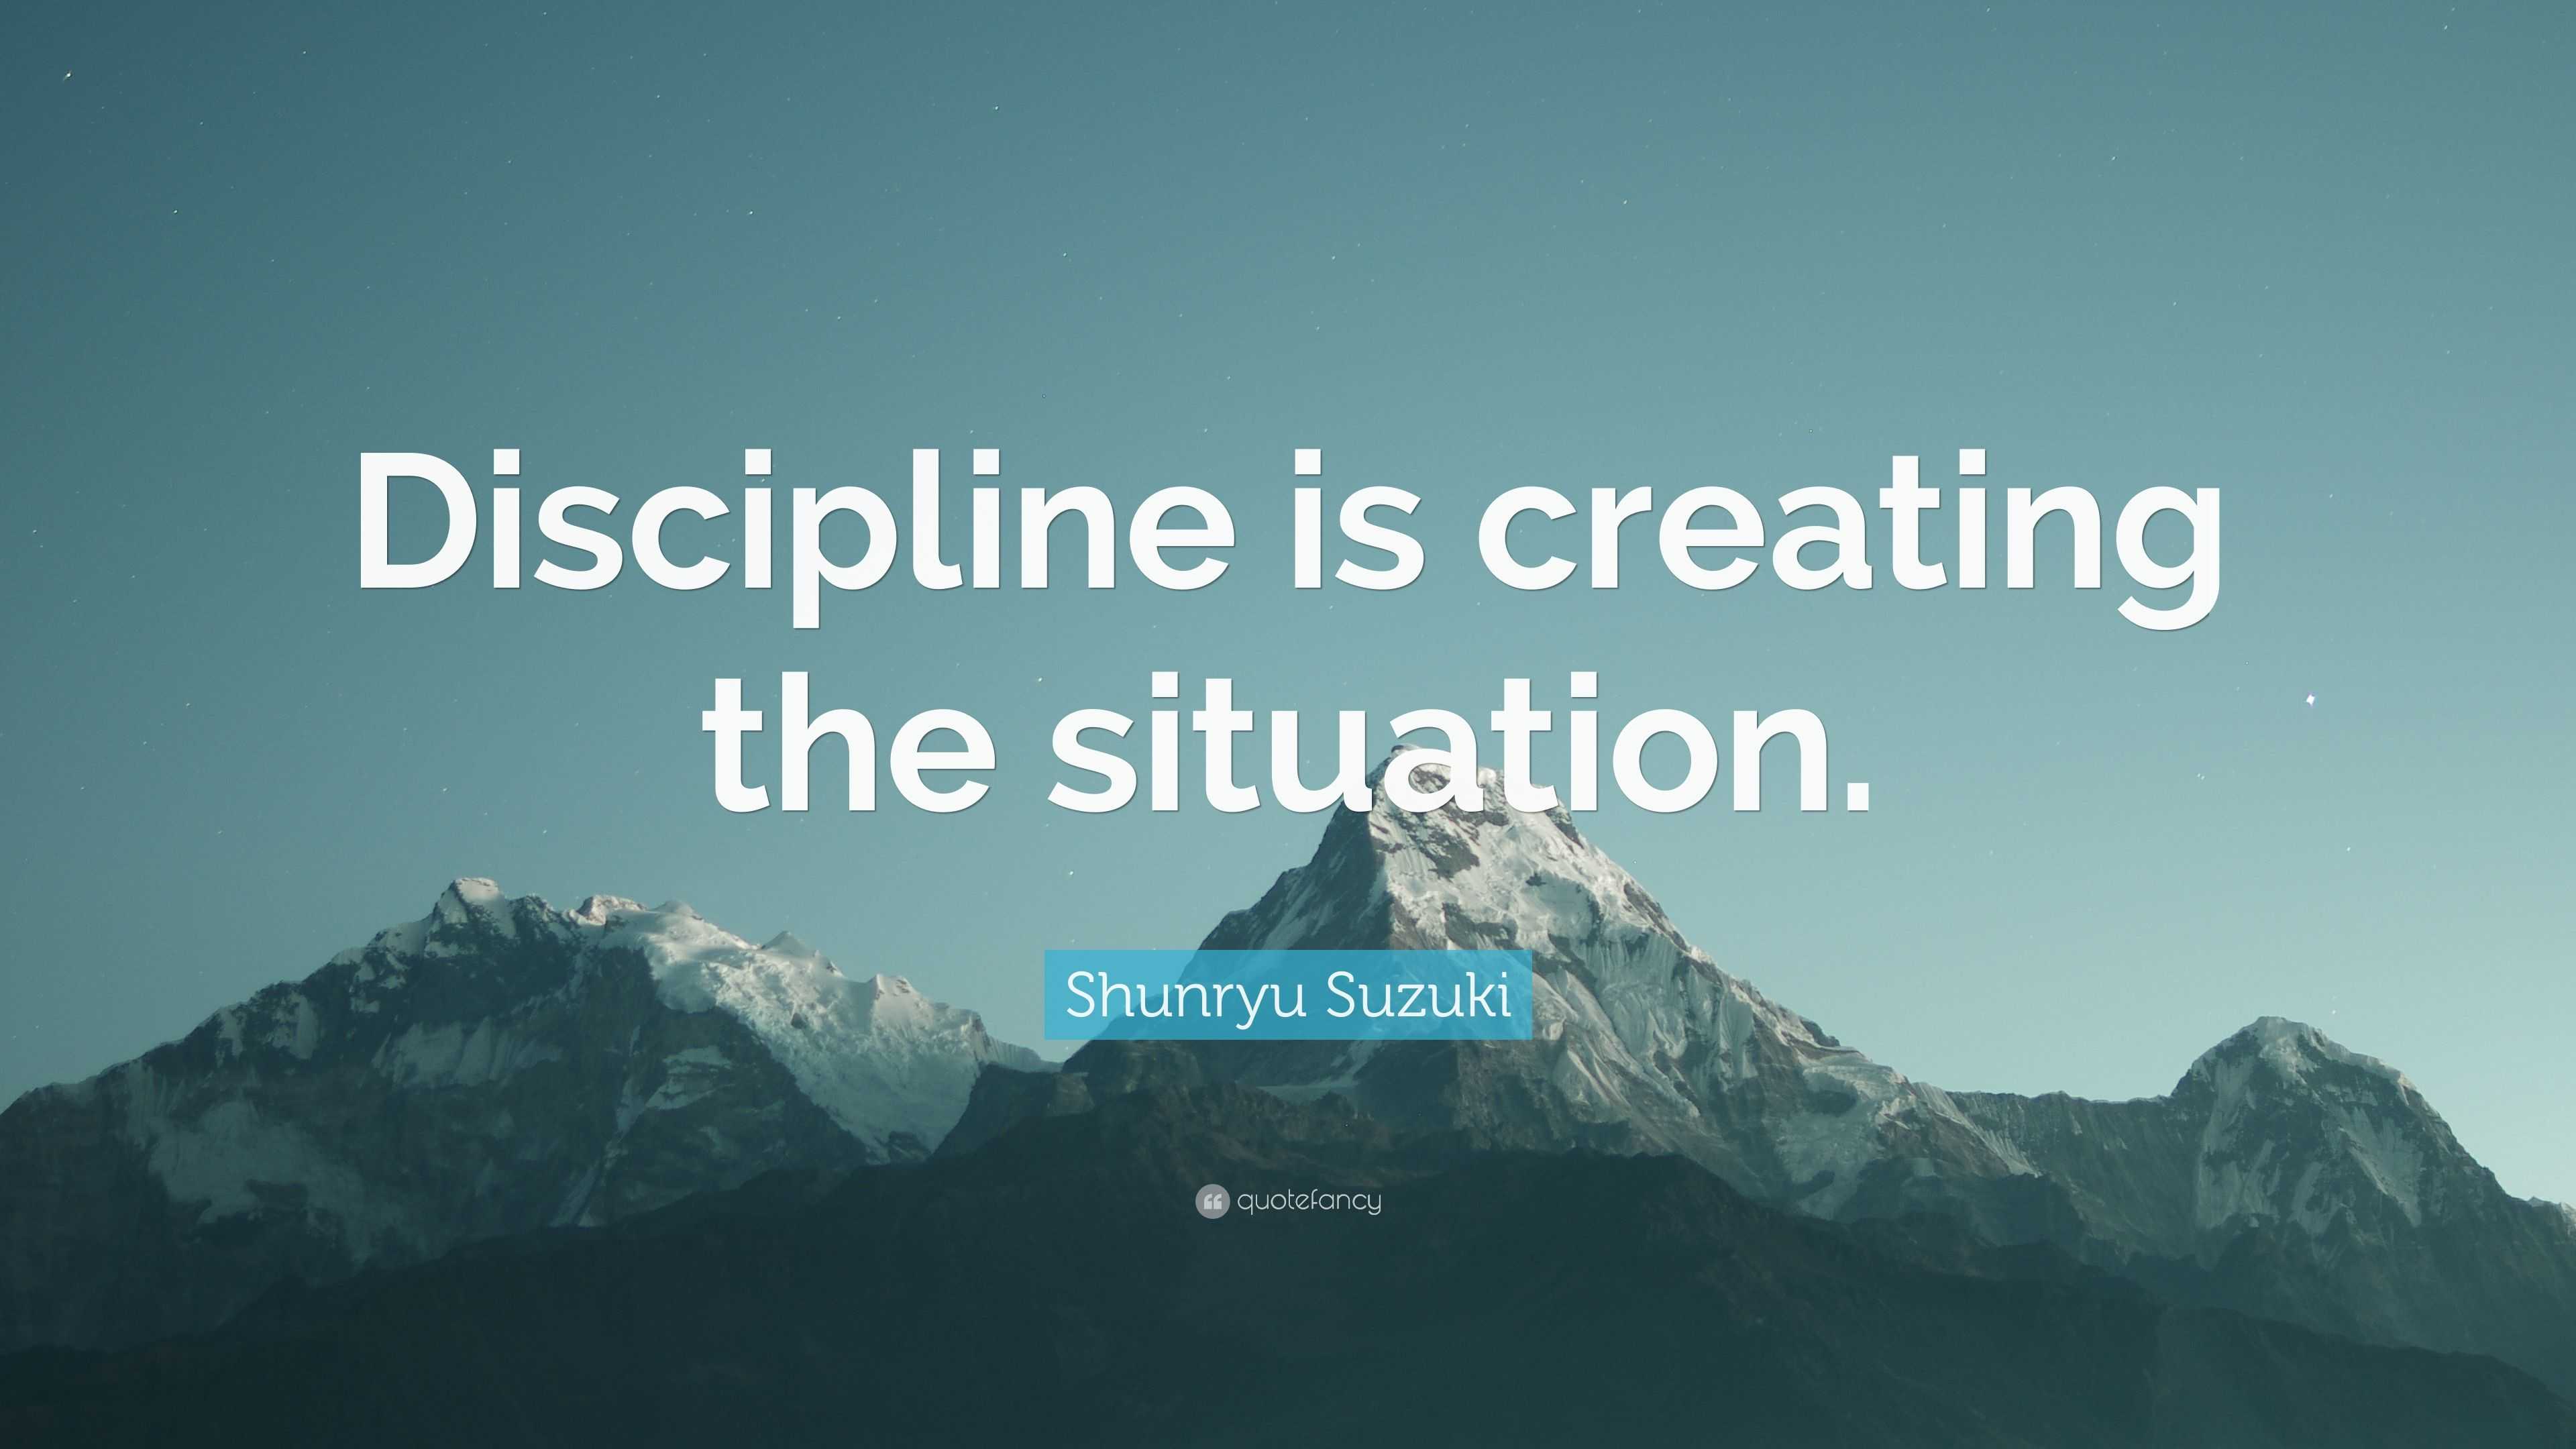 Shunryu Suzuki Quote: “Discipline is creating the situation.”